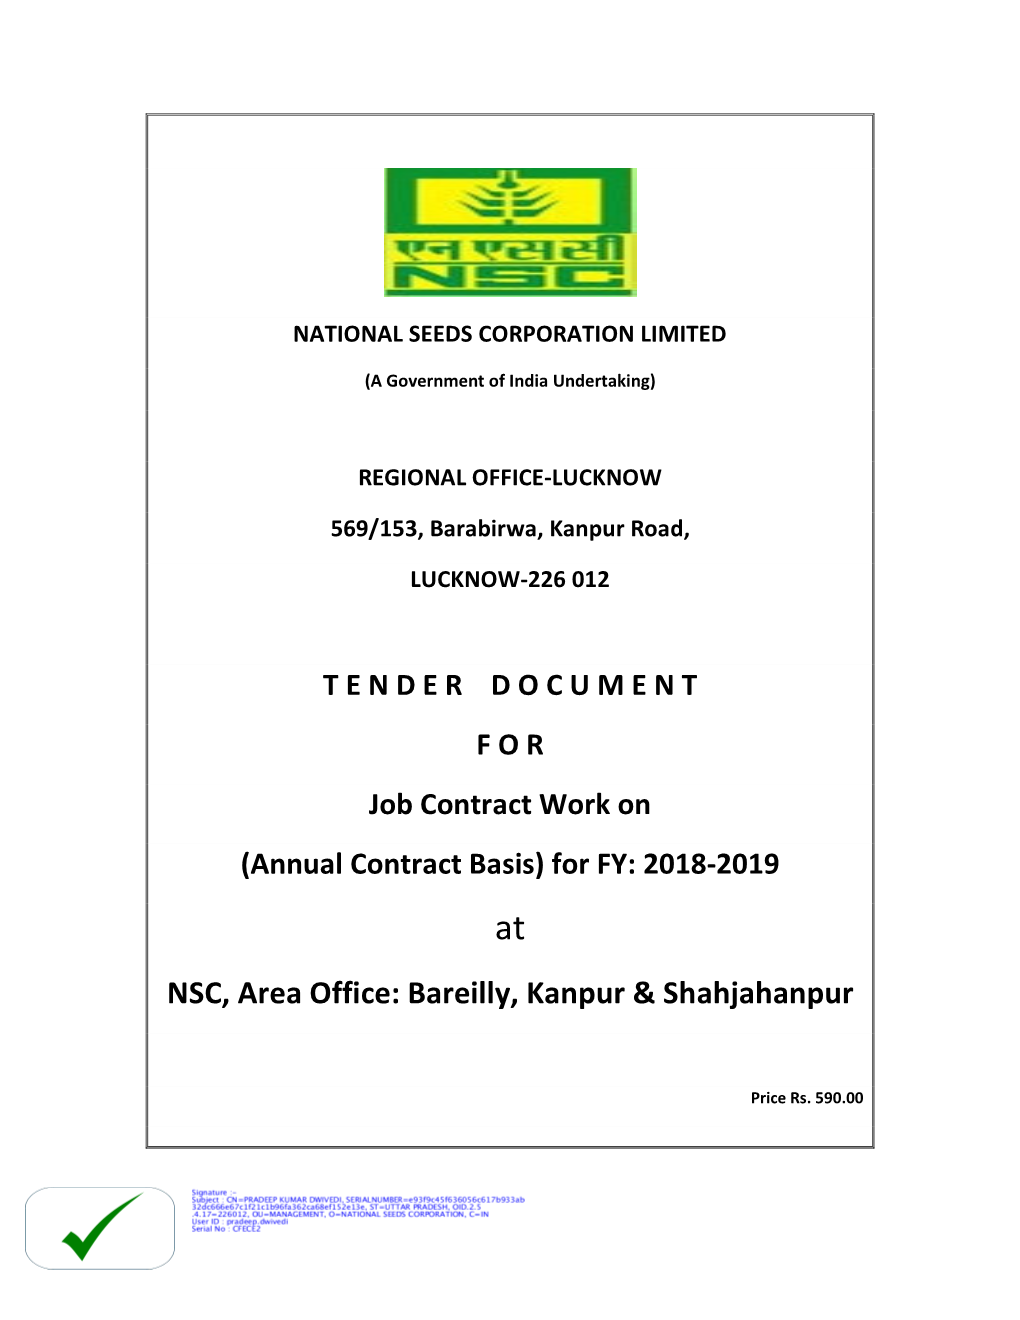 NSC, Area Office: Bareilly, Kanpur & Shahjahanpur